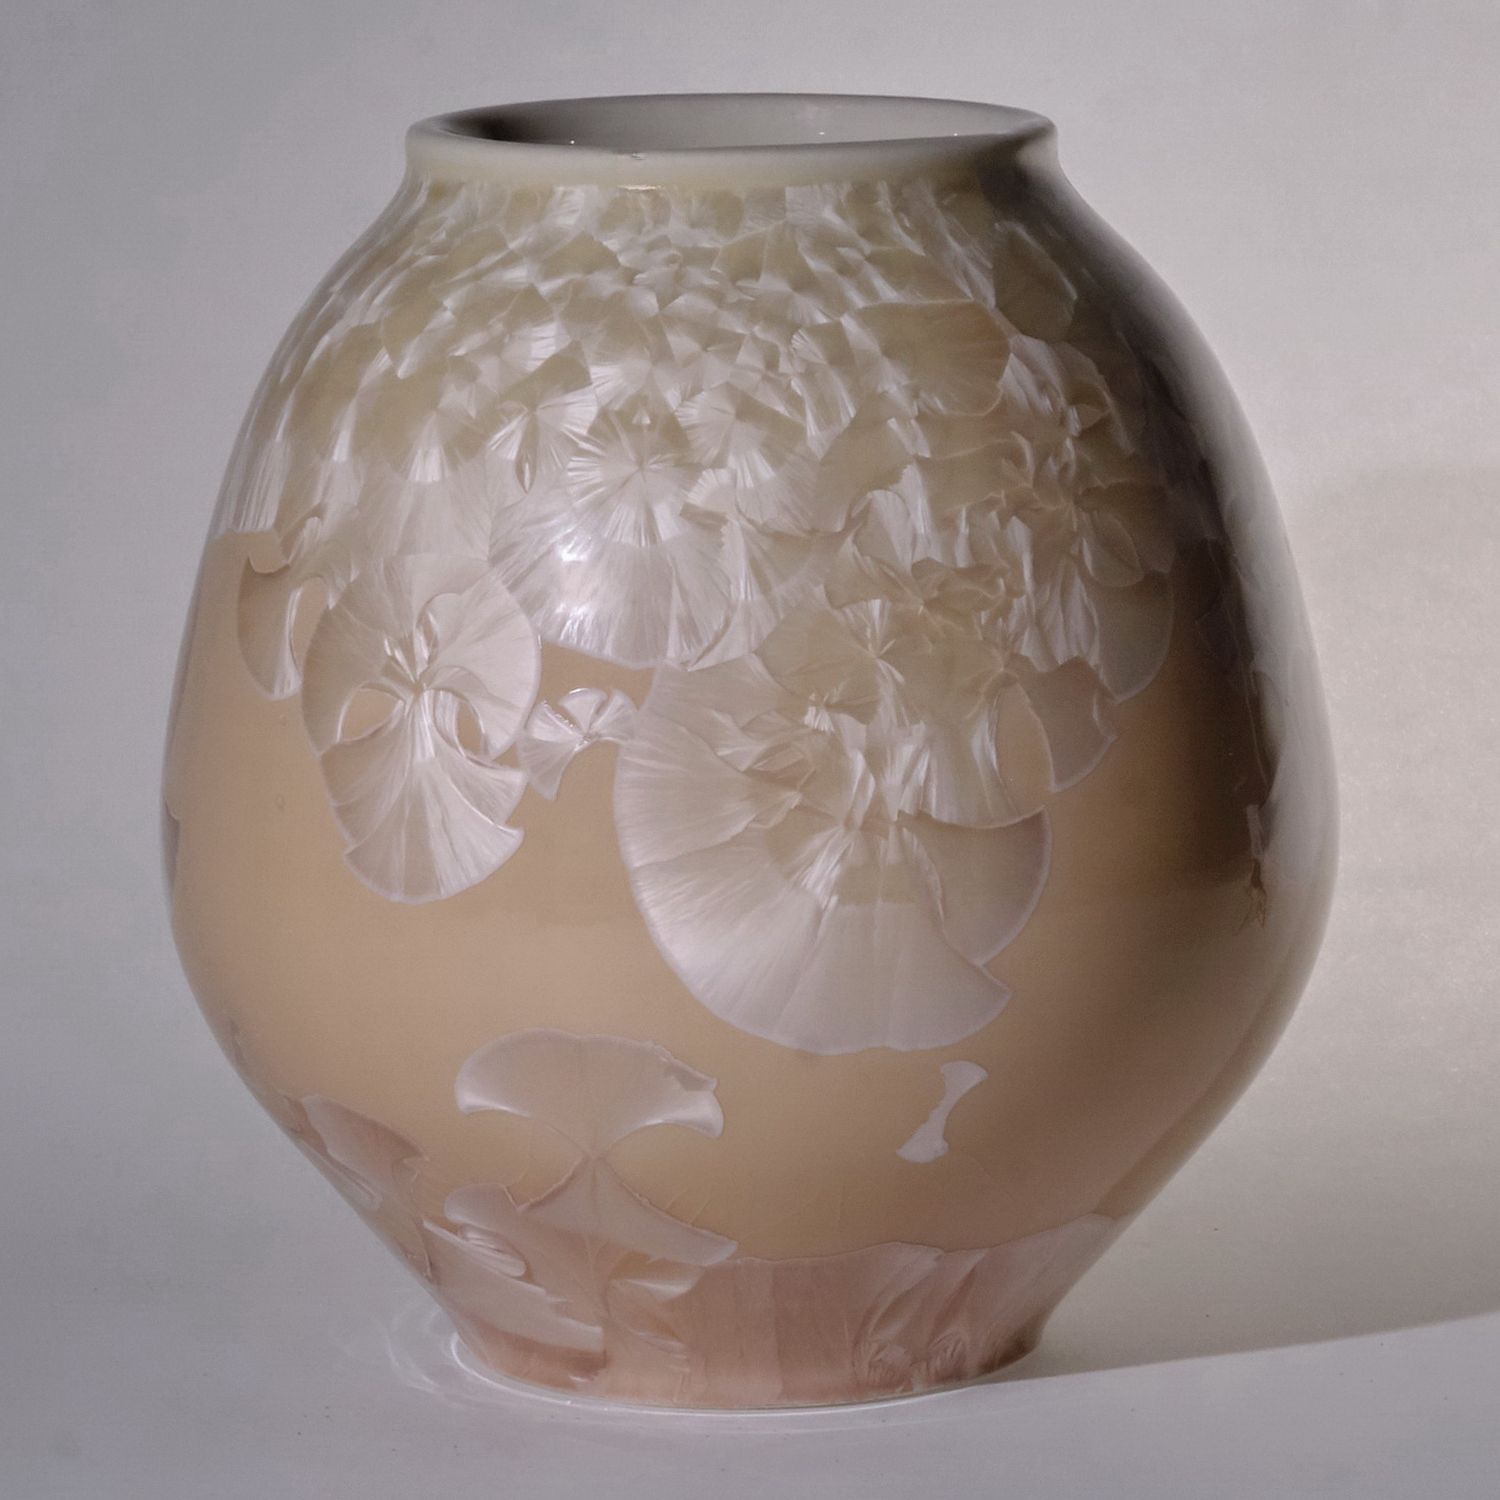 Yumiko Katsuya: Dark Pink Vase Product Image 1 of 2